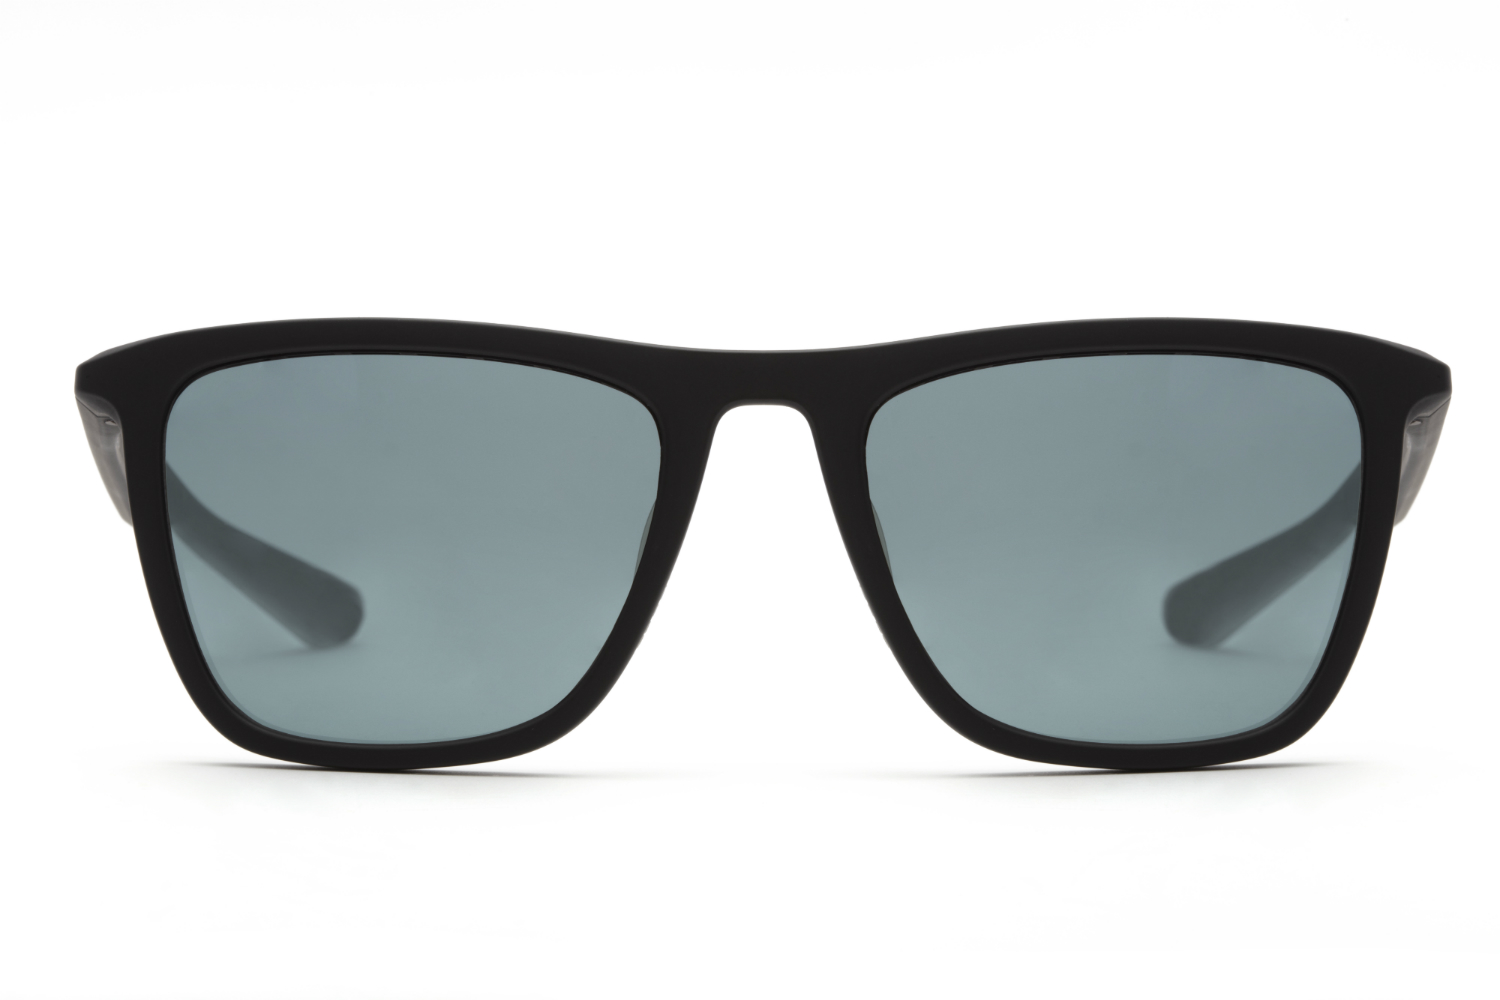 krewe active eyewear sunglasses laborde matteblack front